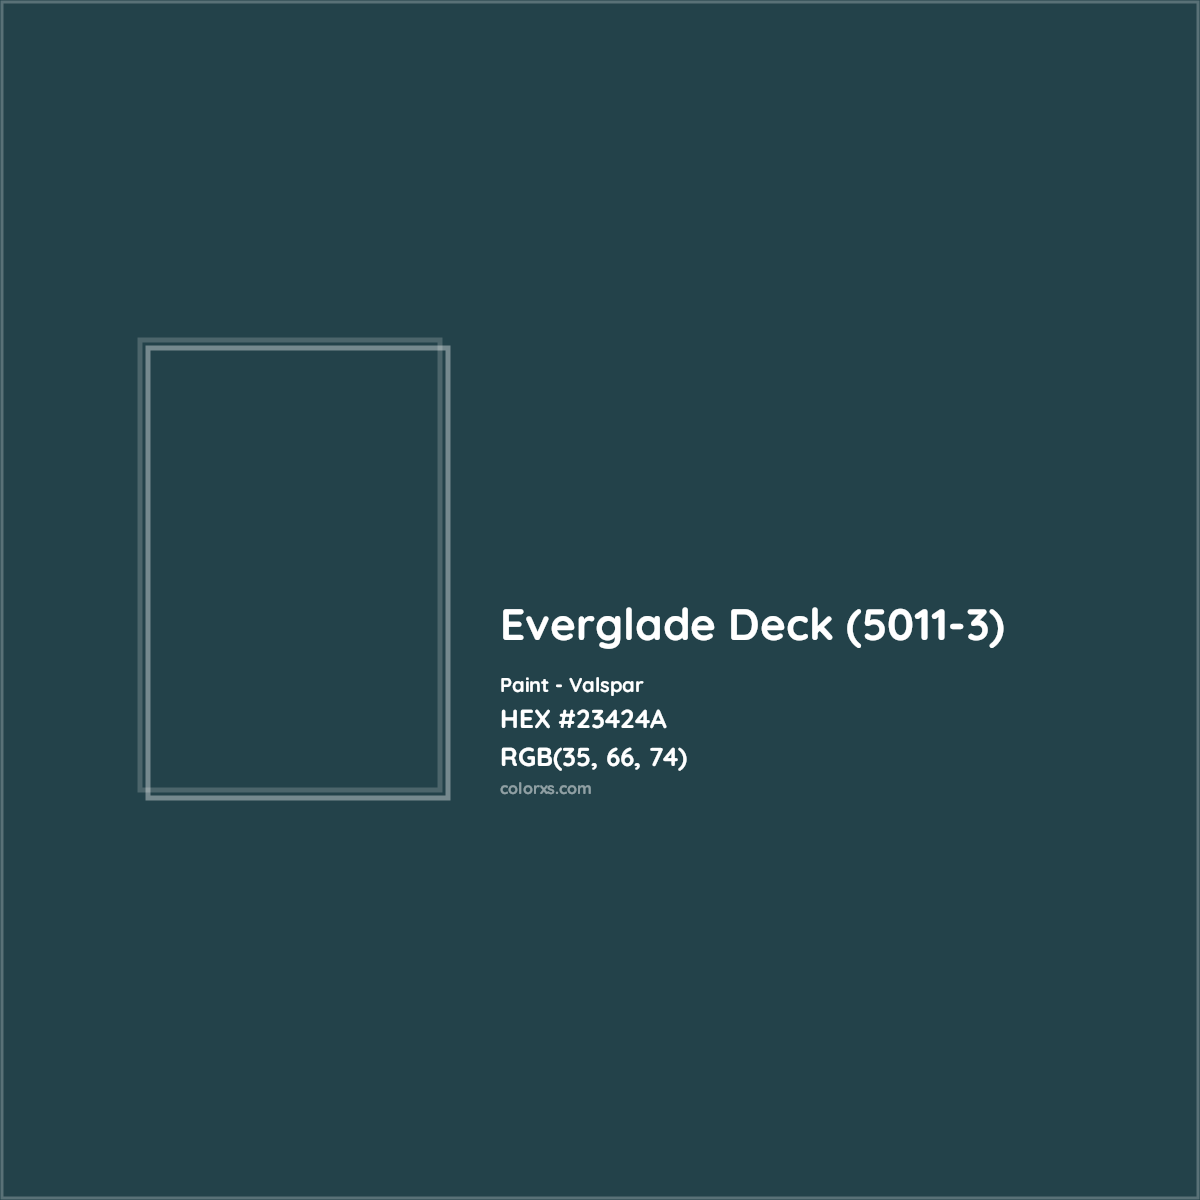 HEX #23424A Everglade Deck (5011-3) Paint Valspar - Color Code